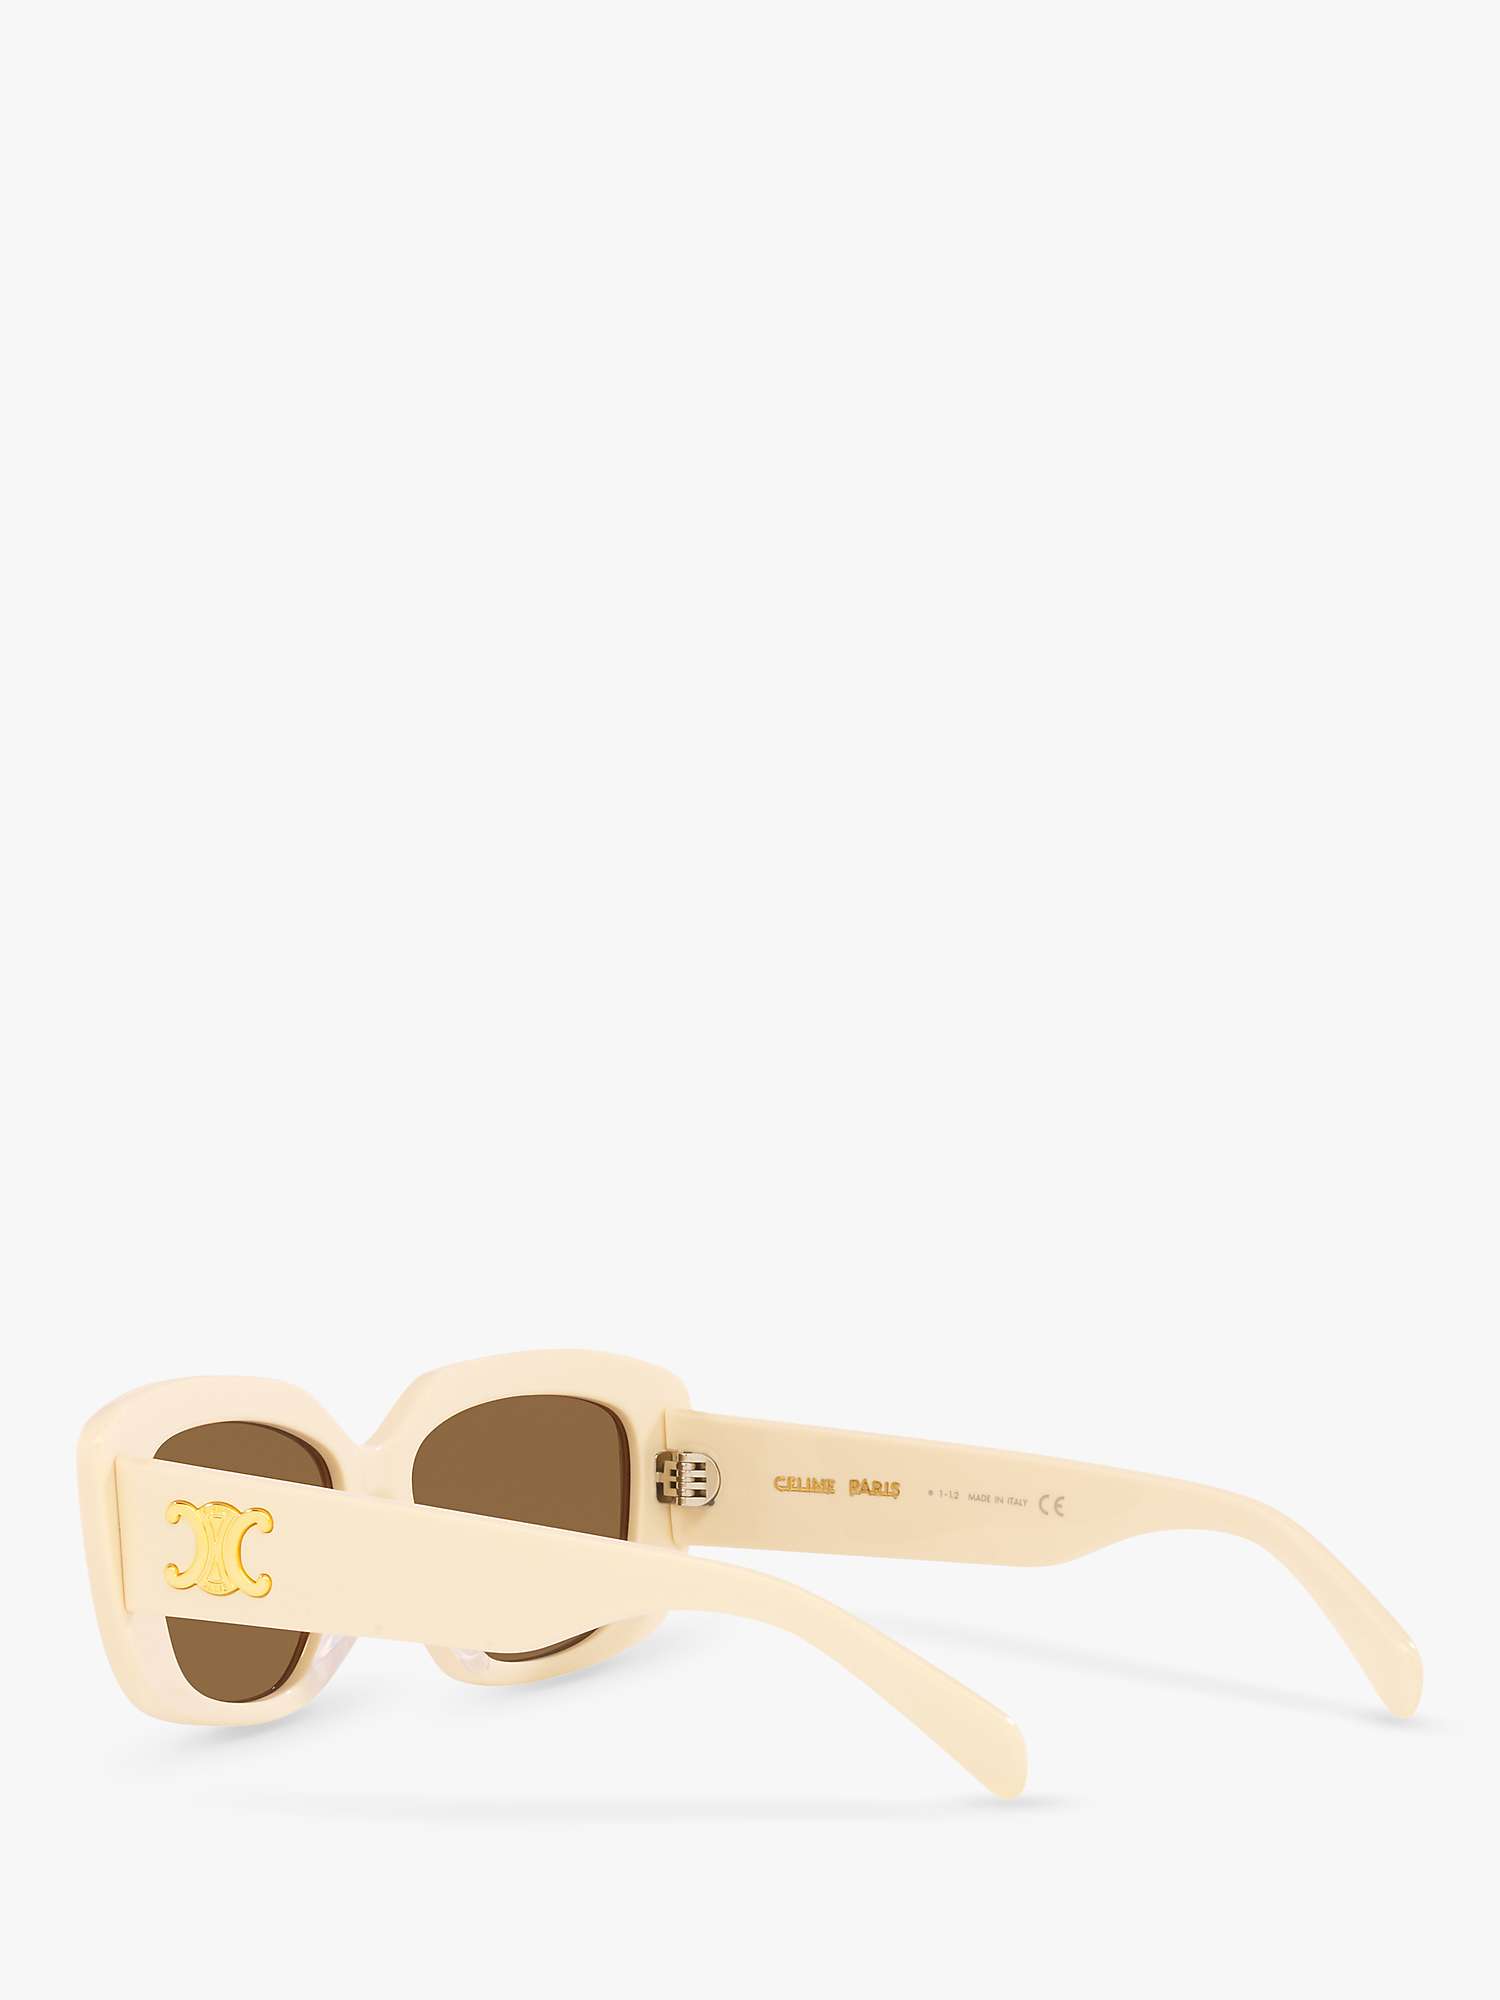 Buy Celine CL40216U Women's Rectangular Sunglasses, Ivory/Brown Online at johnlewis.com